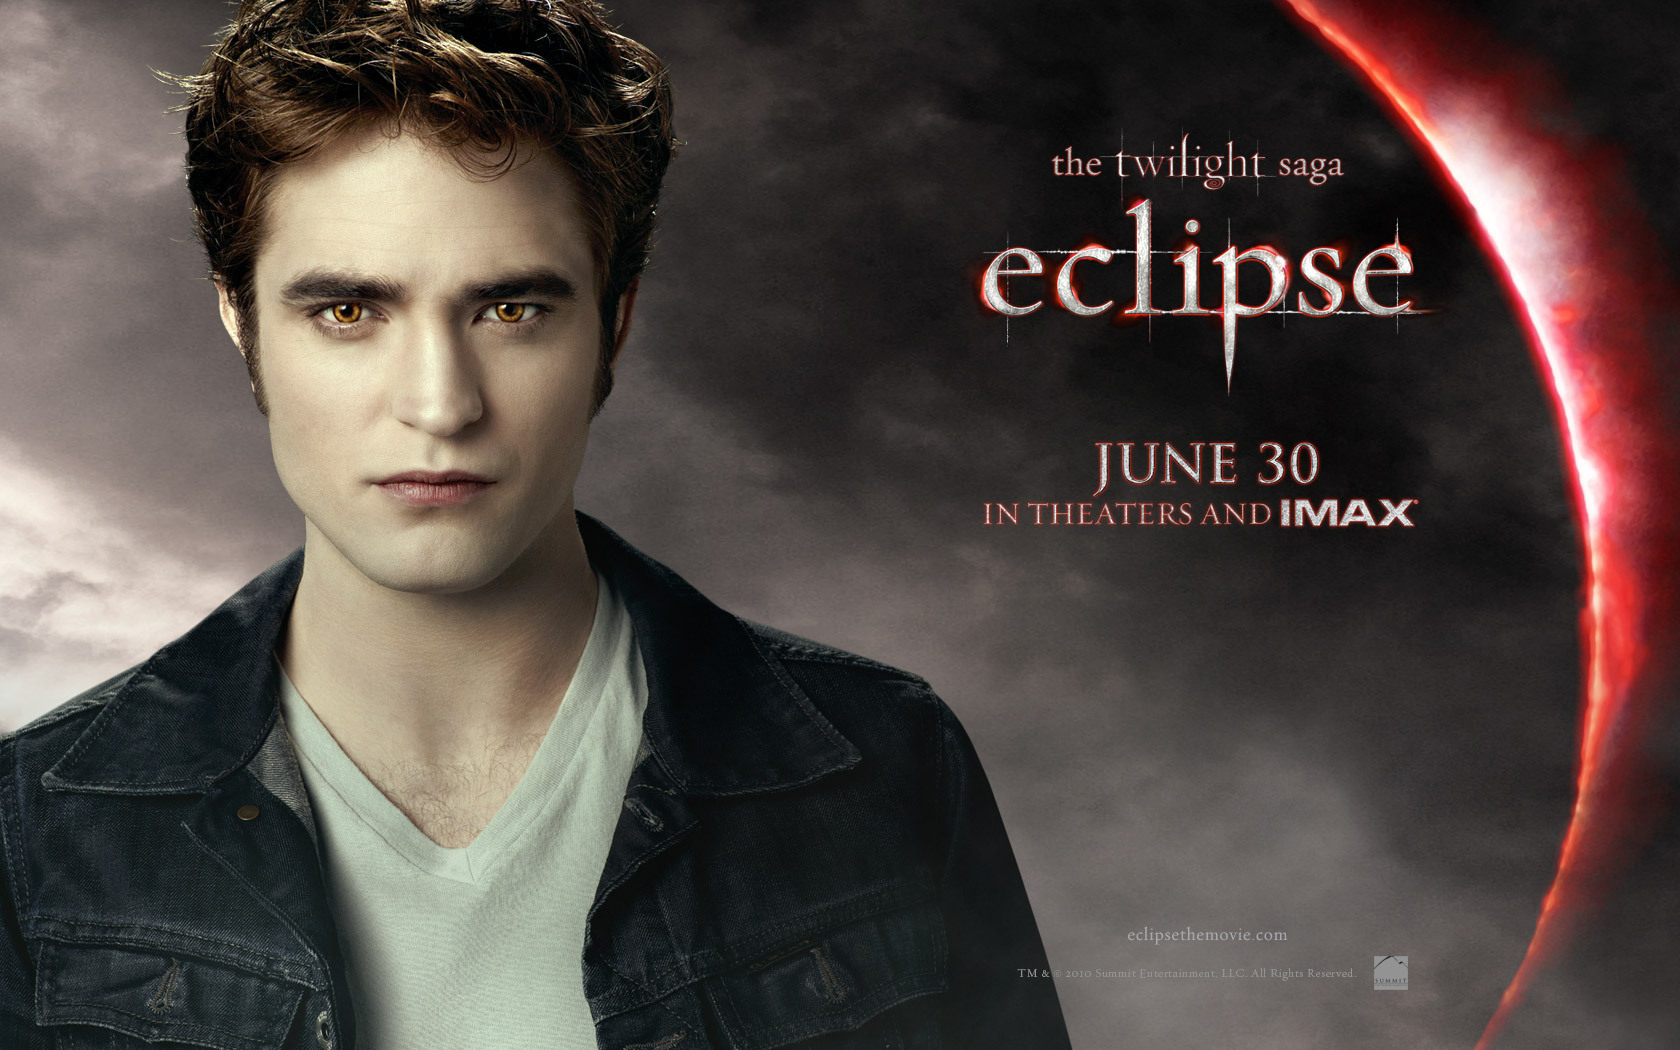 Robert Pattinson Twilight Saga Eclipse Series